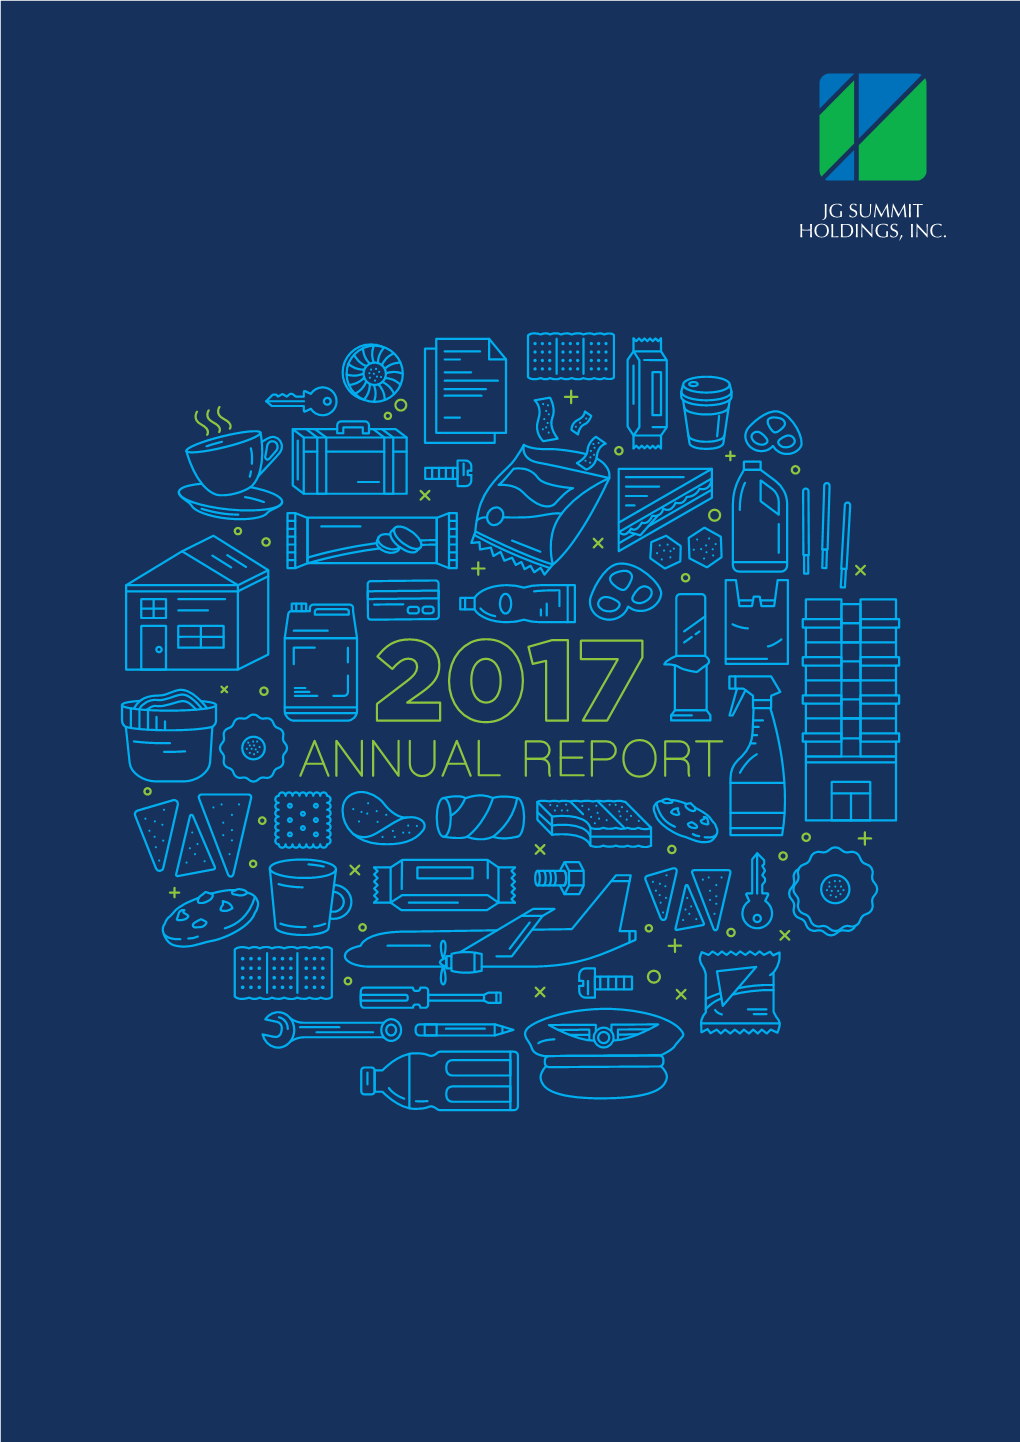 JG Summit Holdings Inc. Annual Report 2017